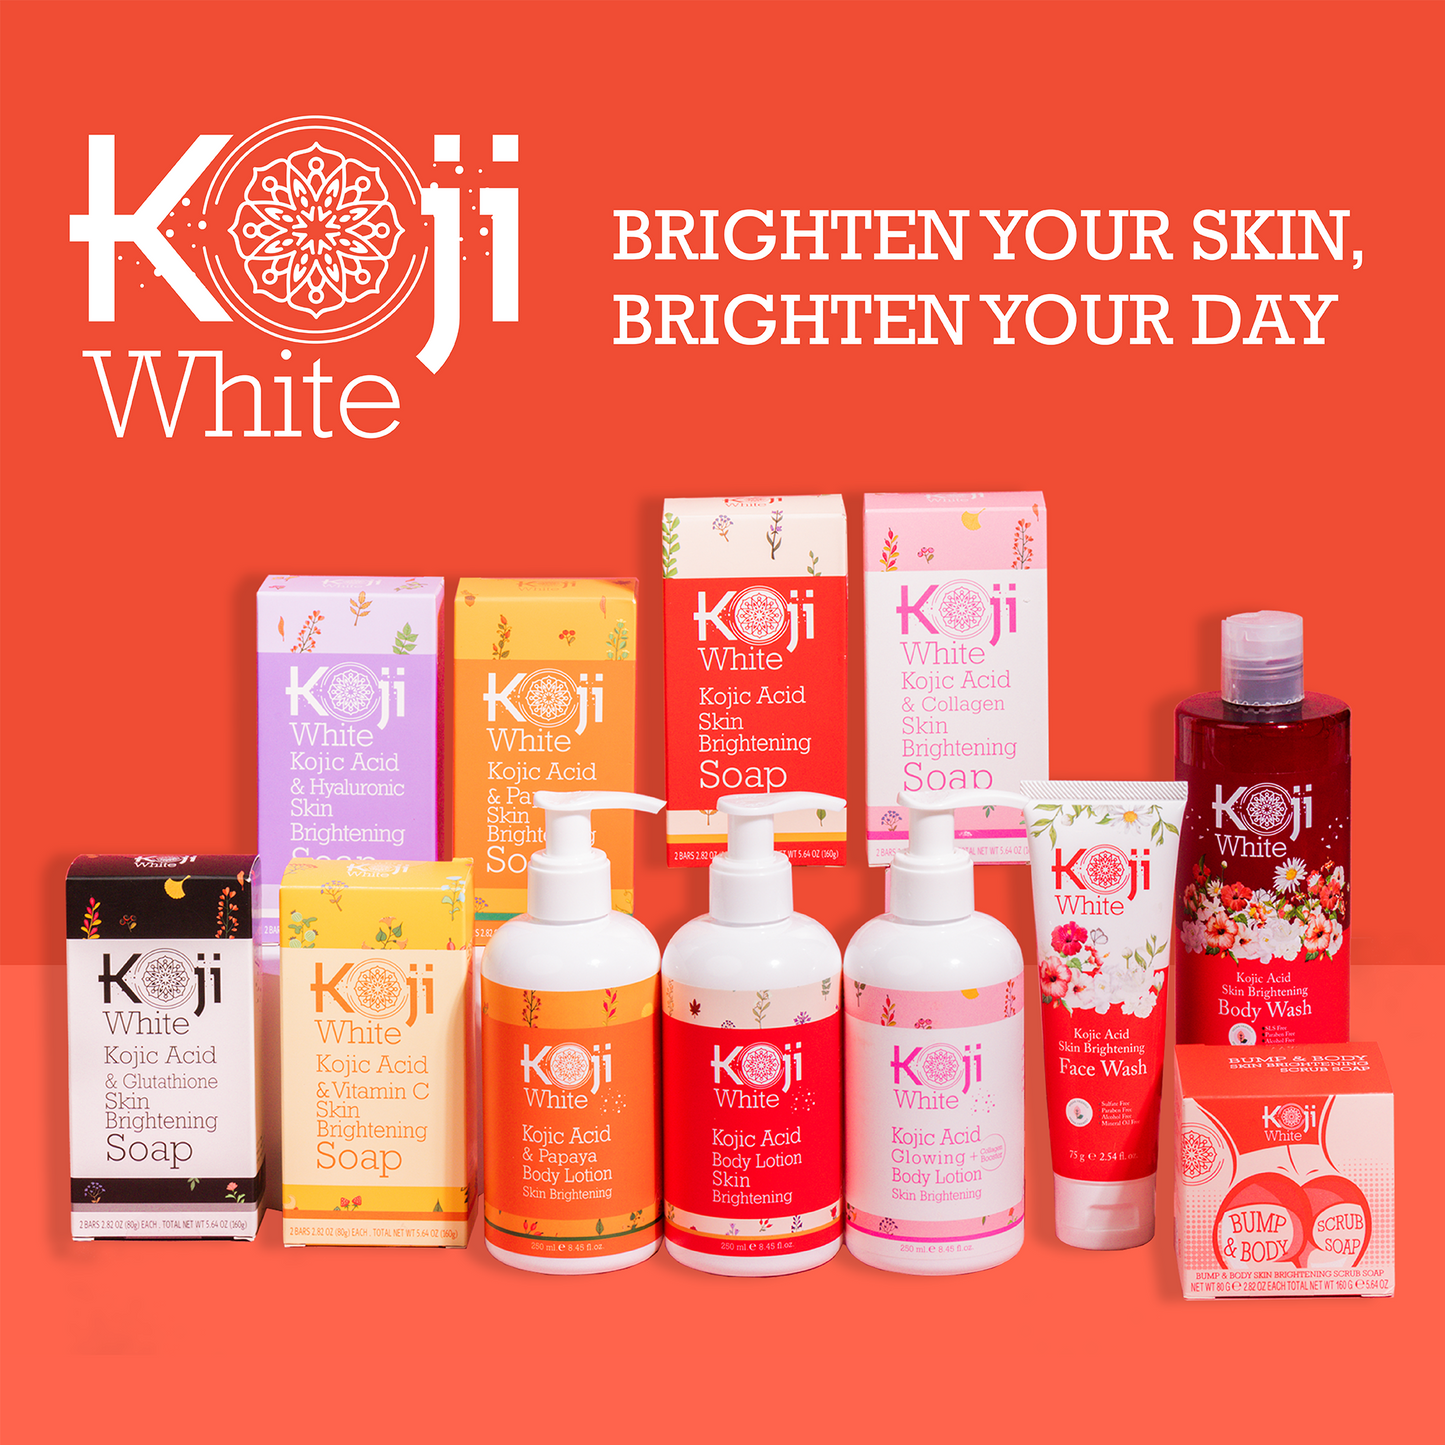 Koji White Kojic Acid & Hyaluronic Acid Brightening Soap